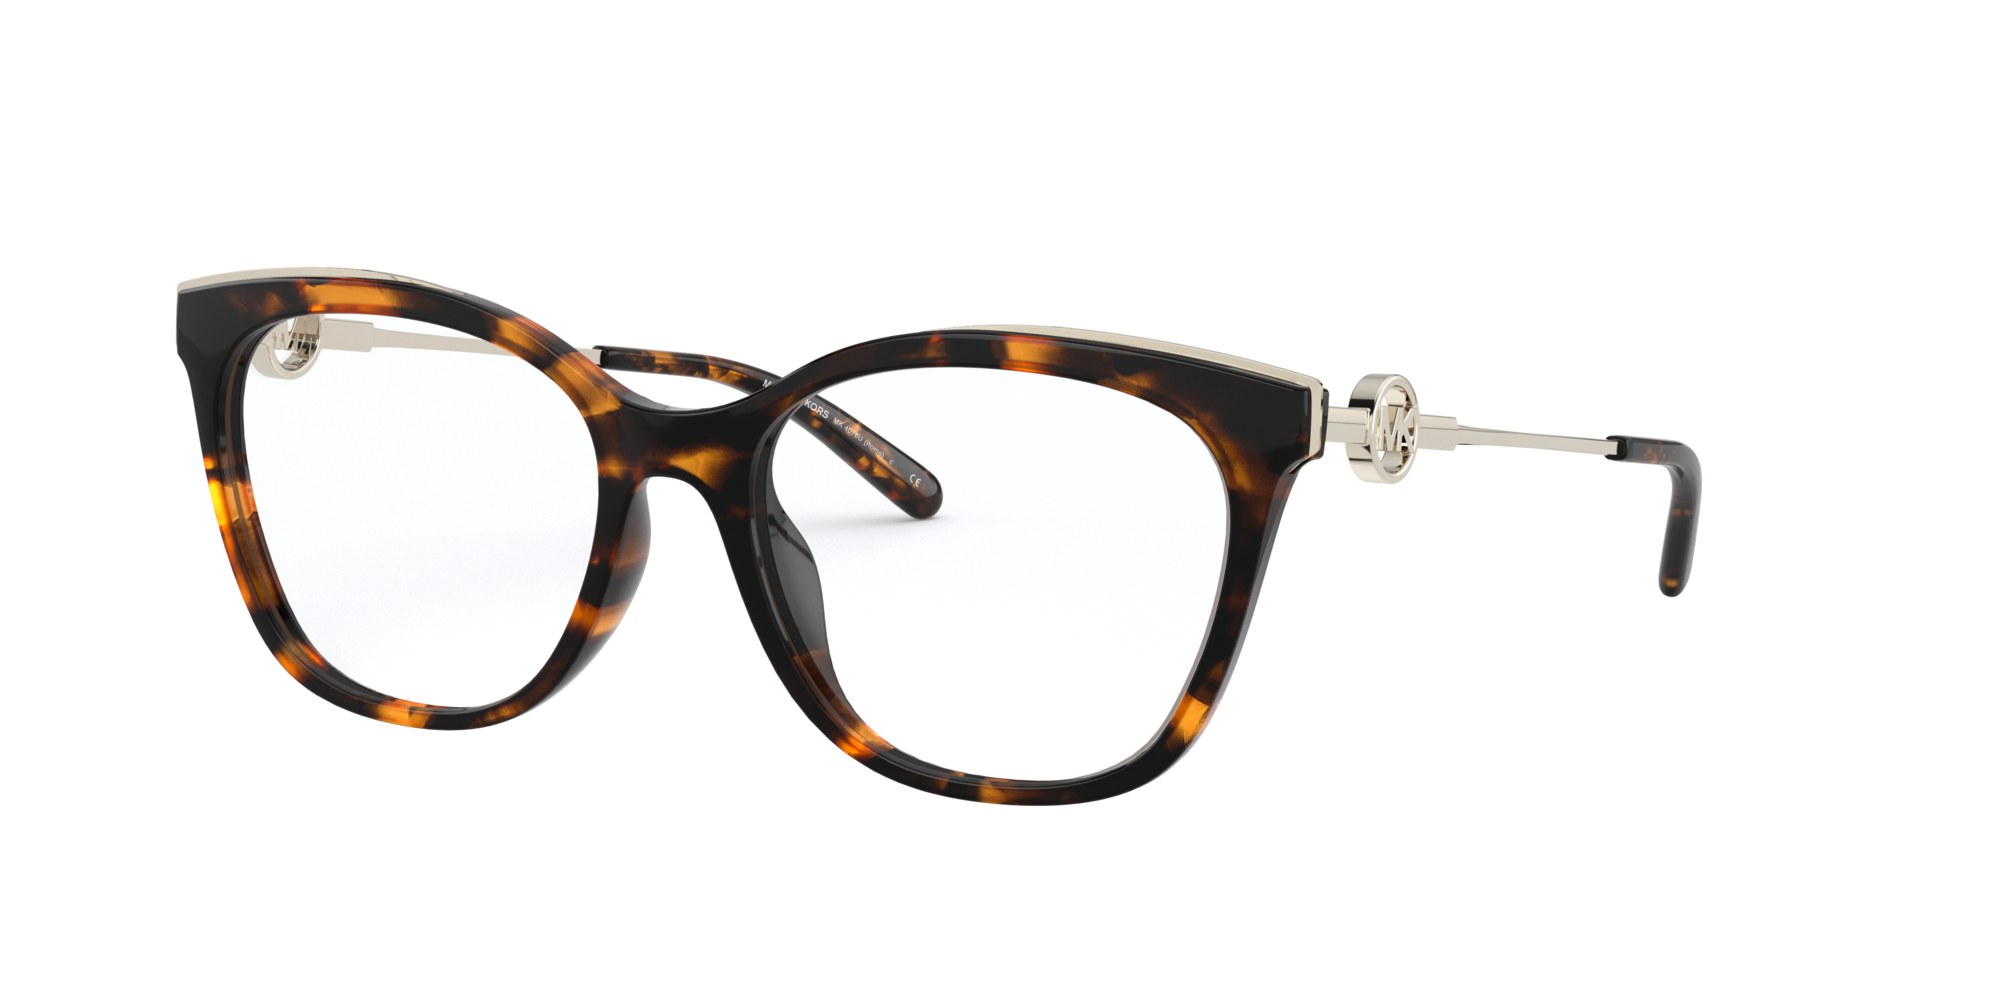 Angle_Left01 Michael Kors MK 4076U (3006) Glasses Transparent / Tortoise Shell